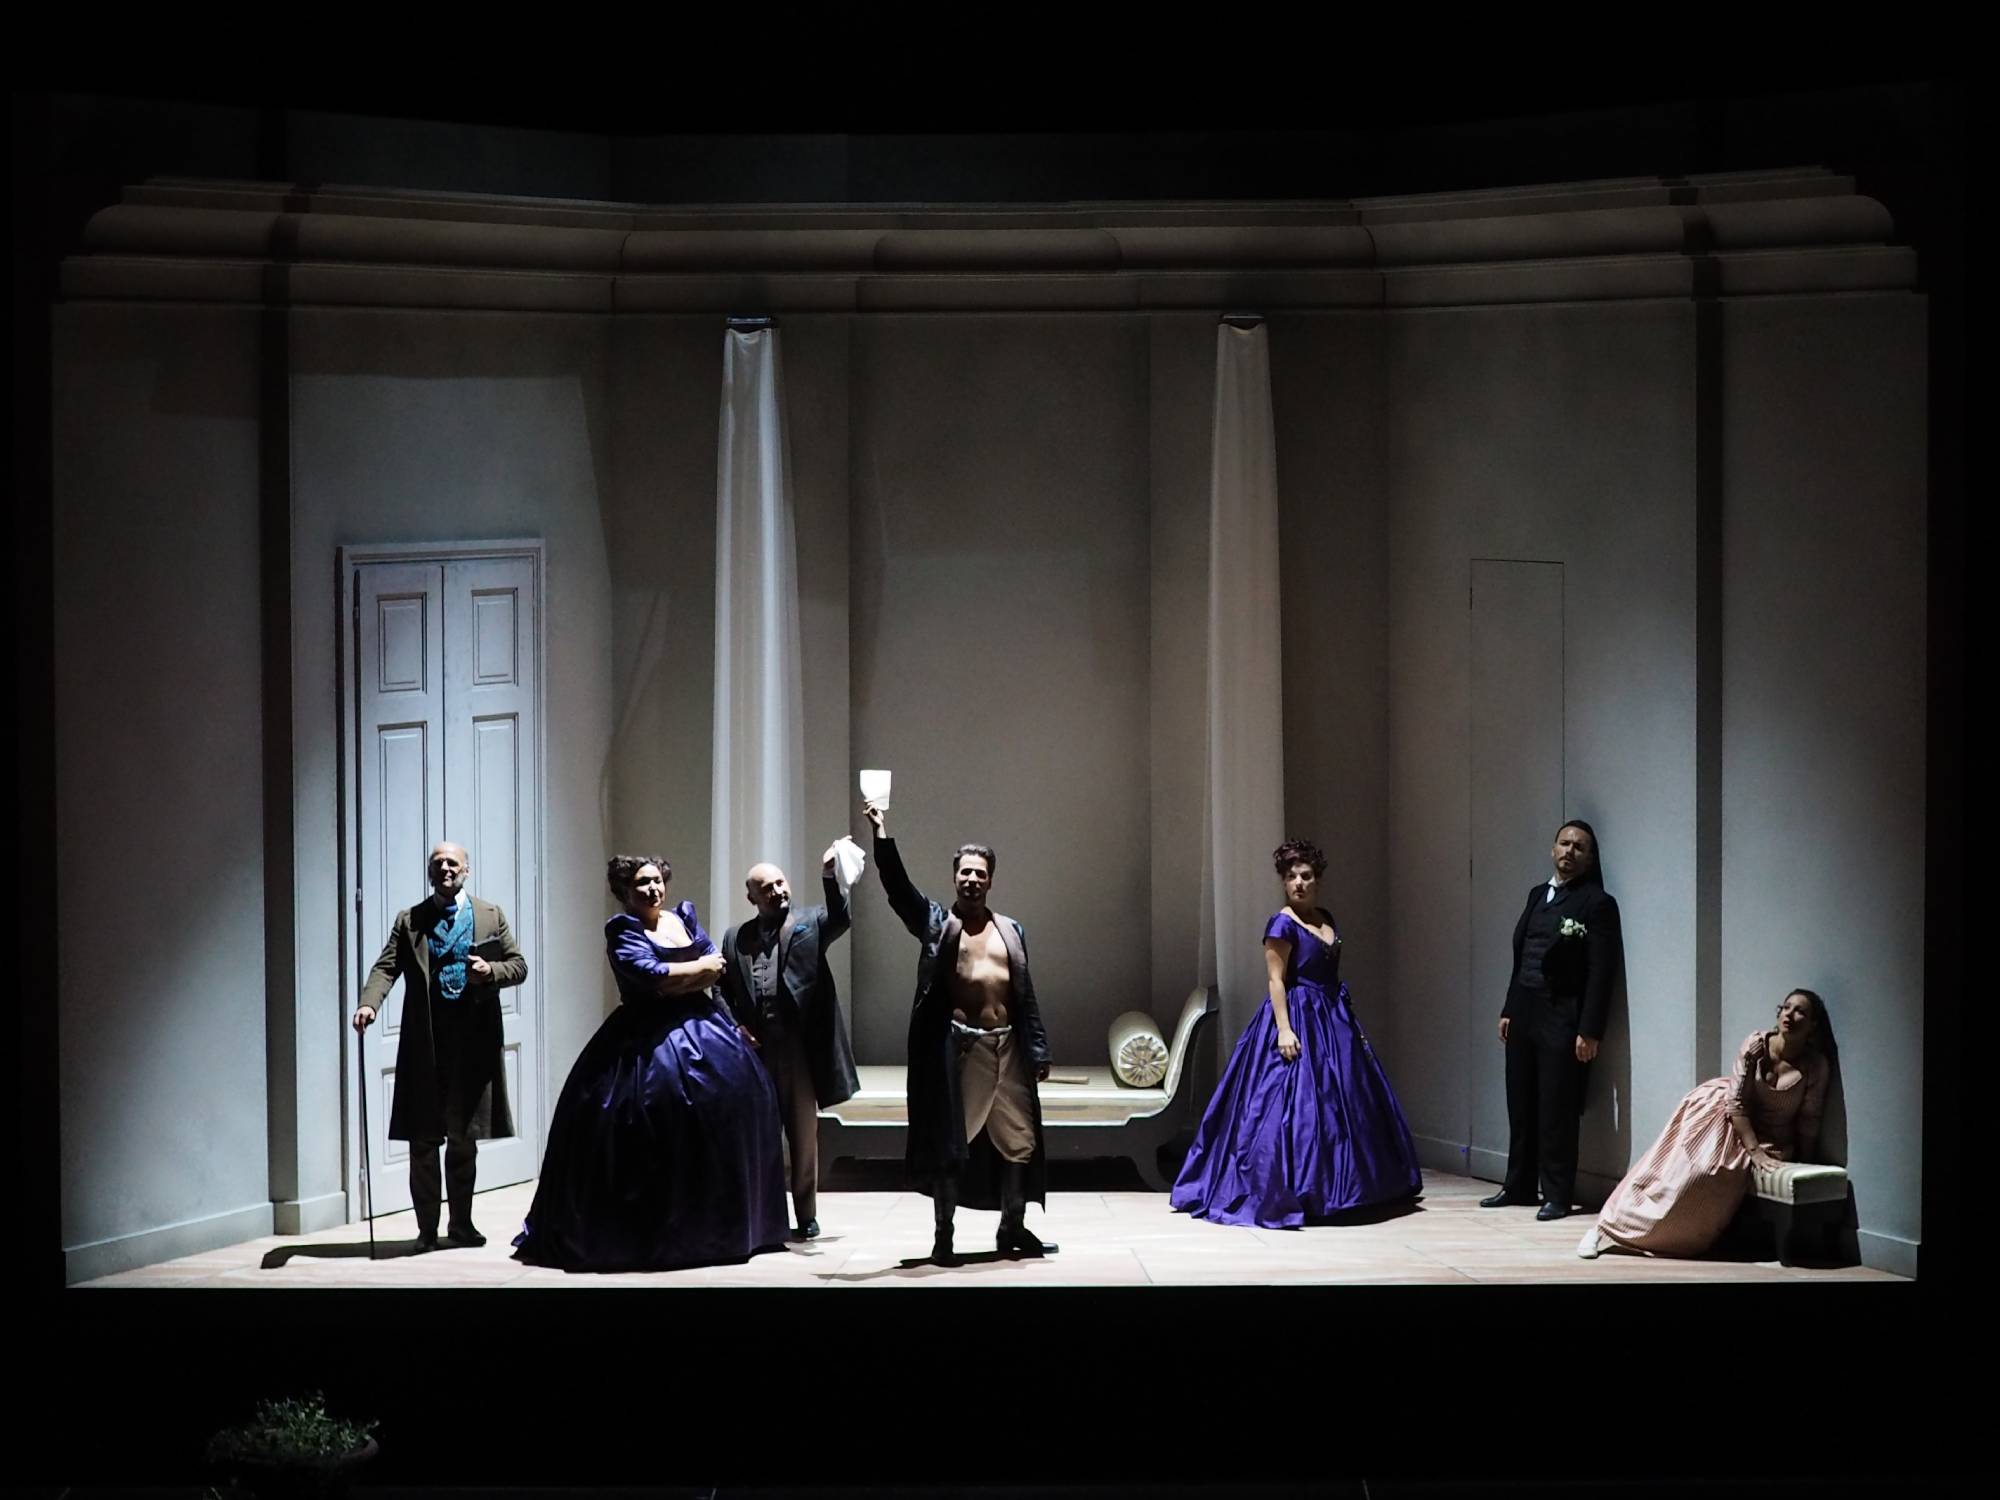 Le nozze di Figaro, Regie: Nicole Claudia Weber, Foto: stagedesign